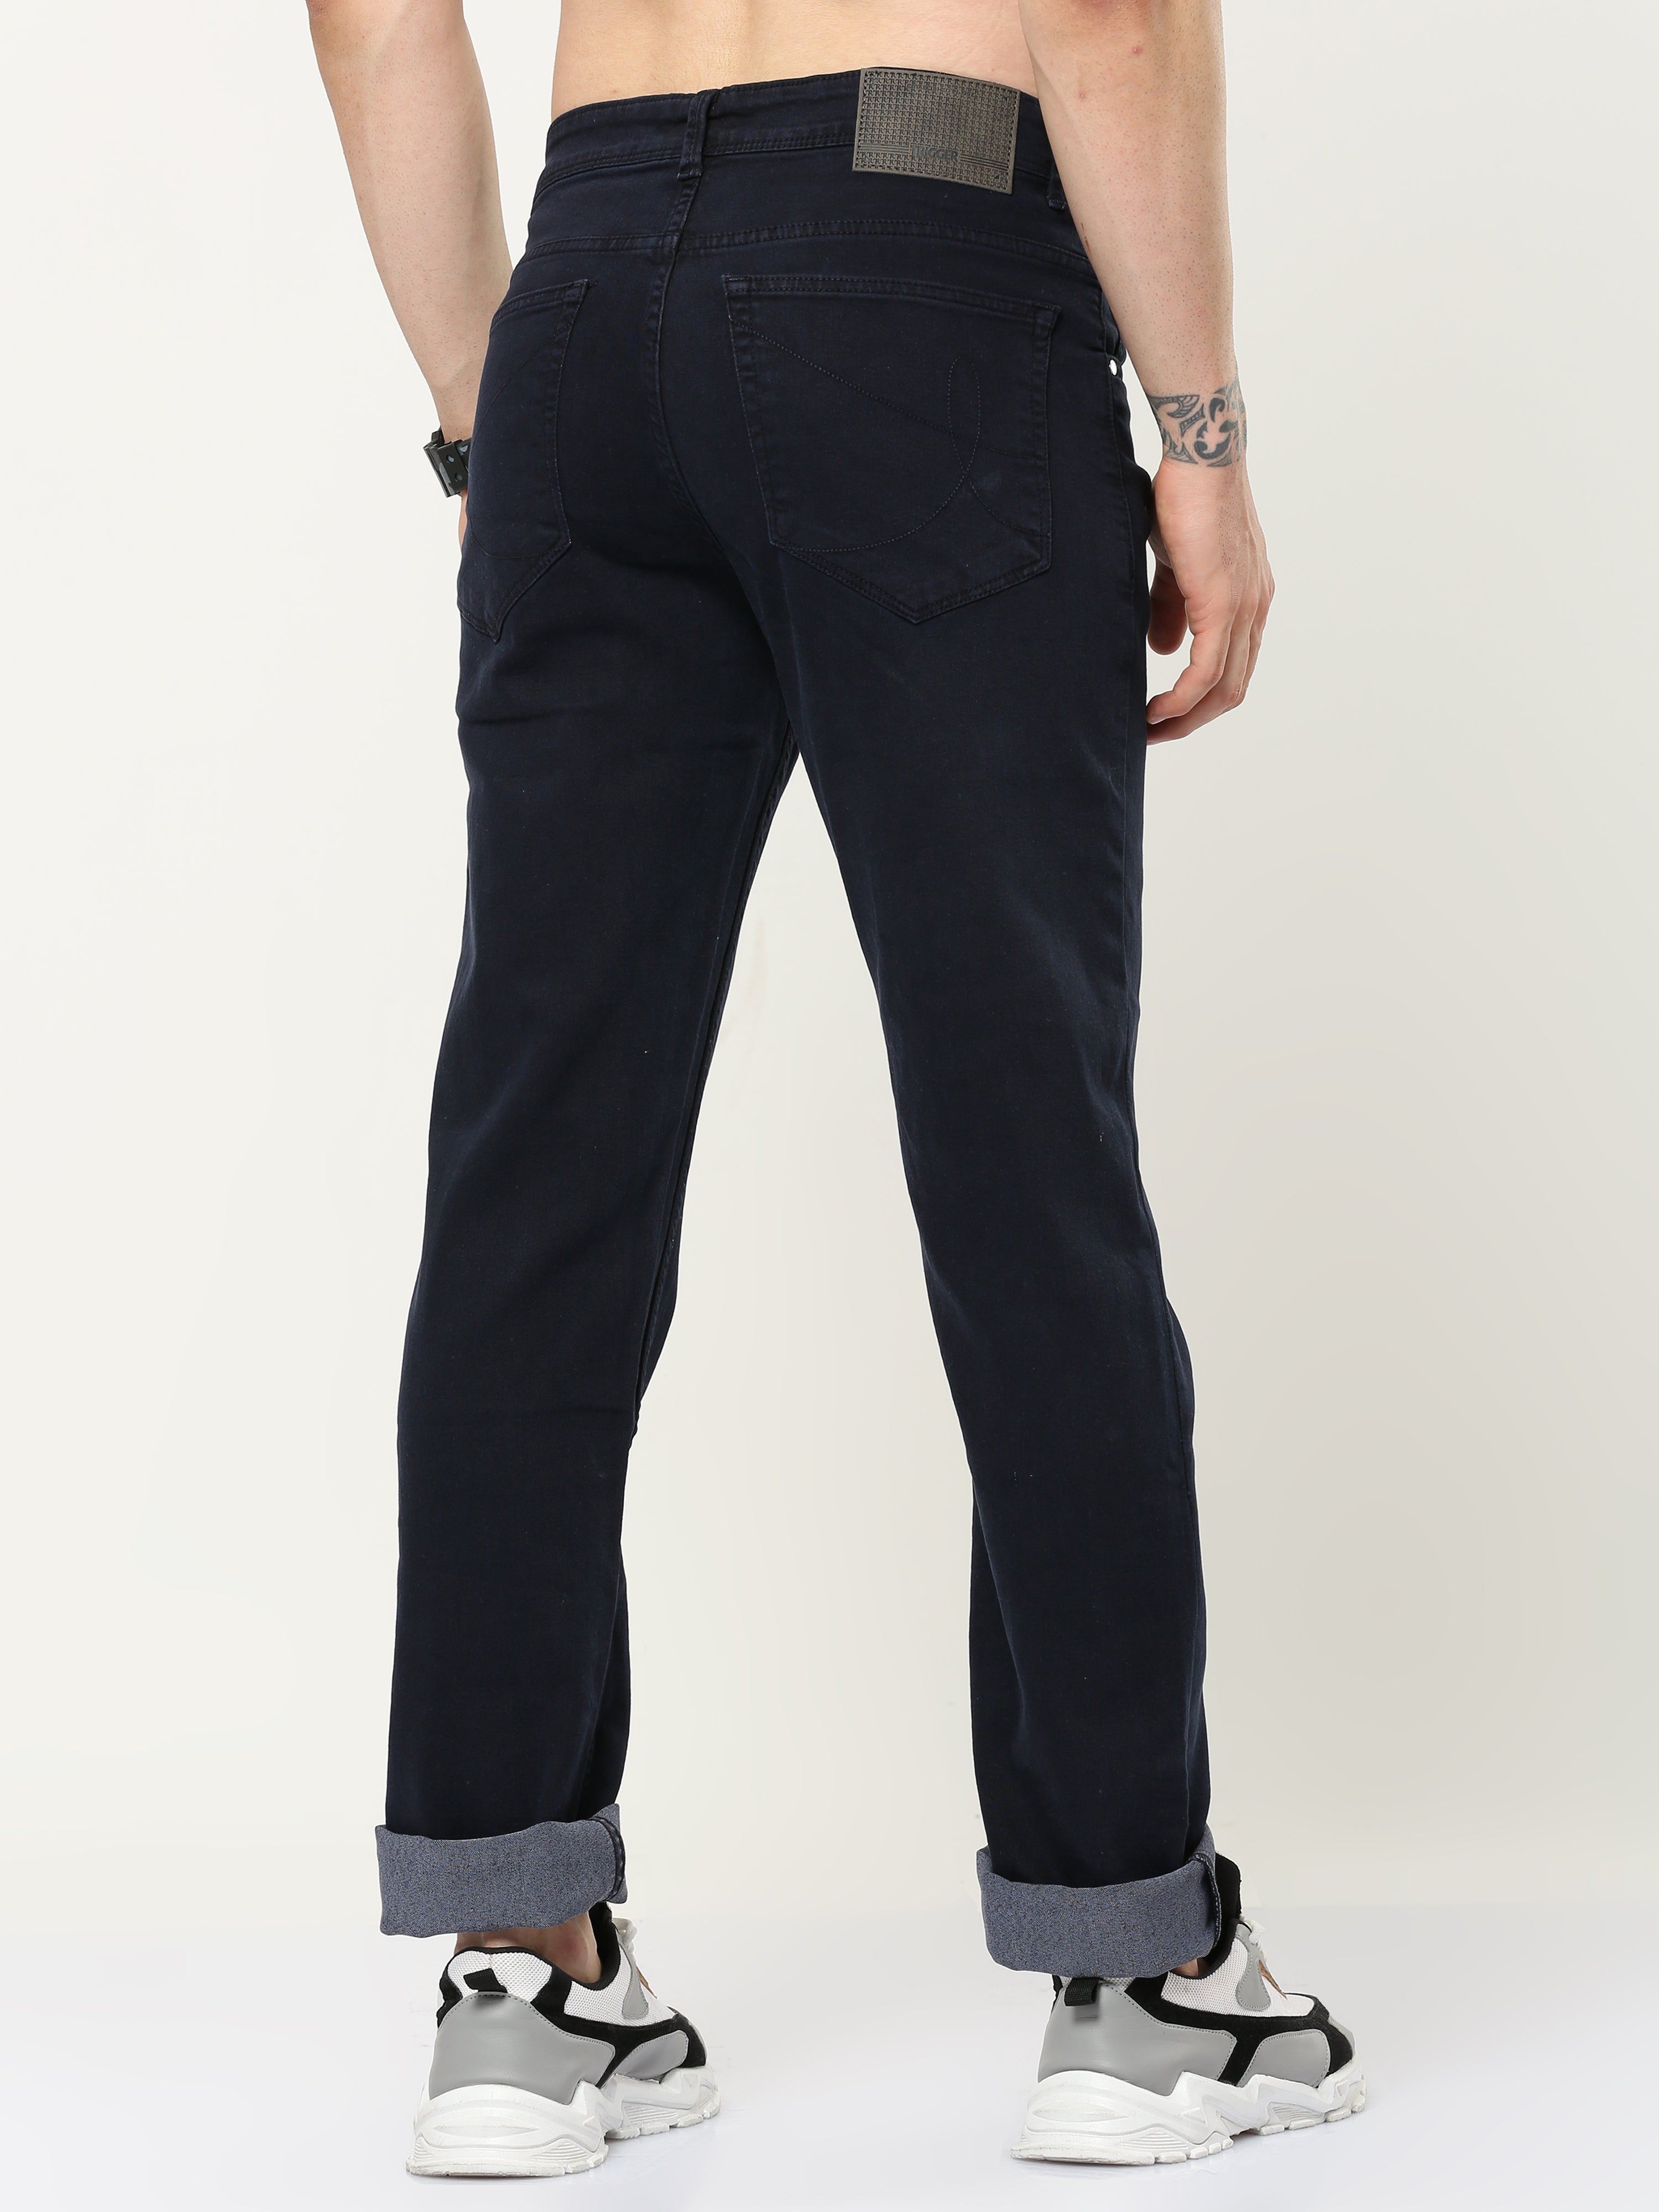 Aero Fit Men's Slim Regular Fit Jeans